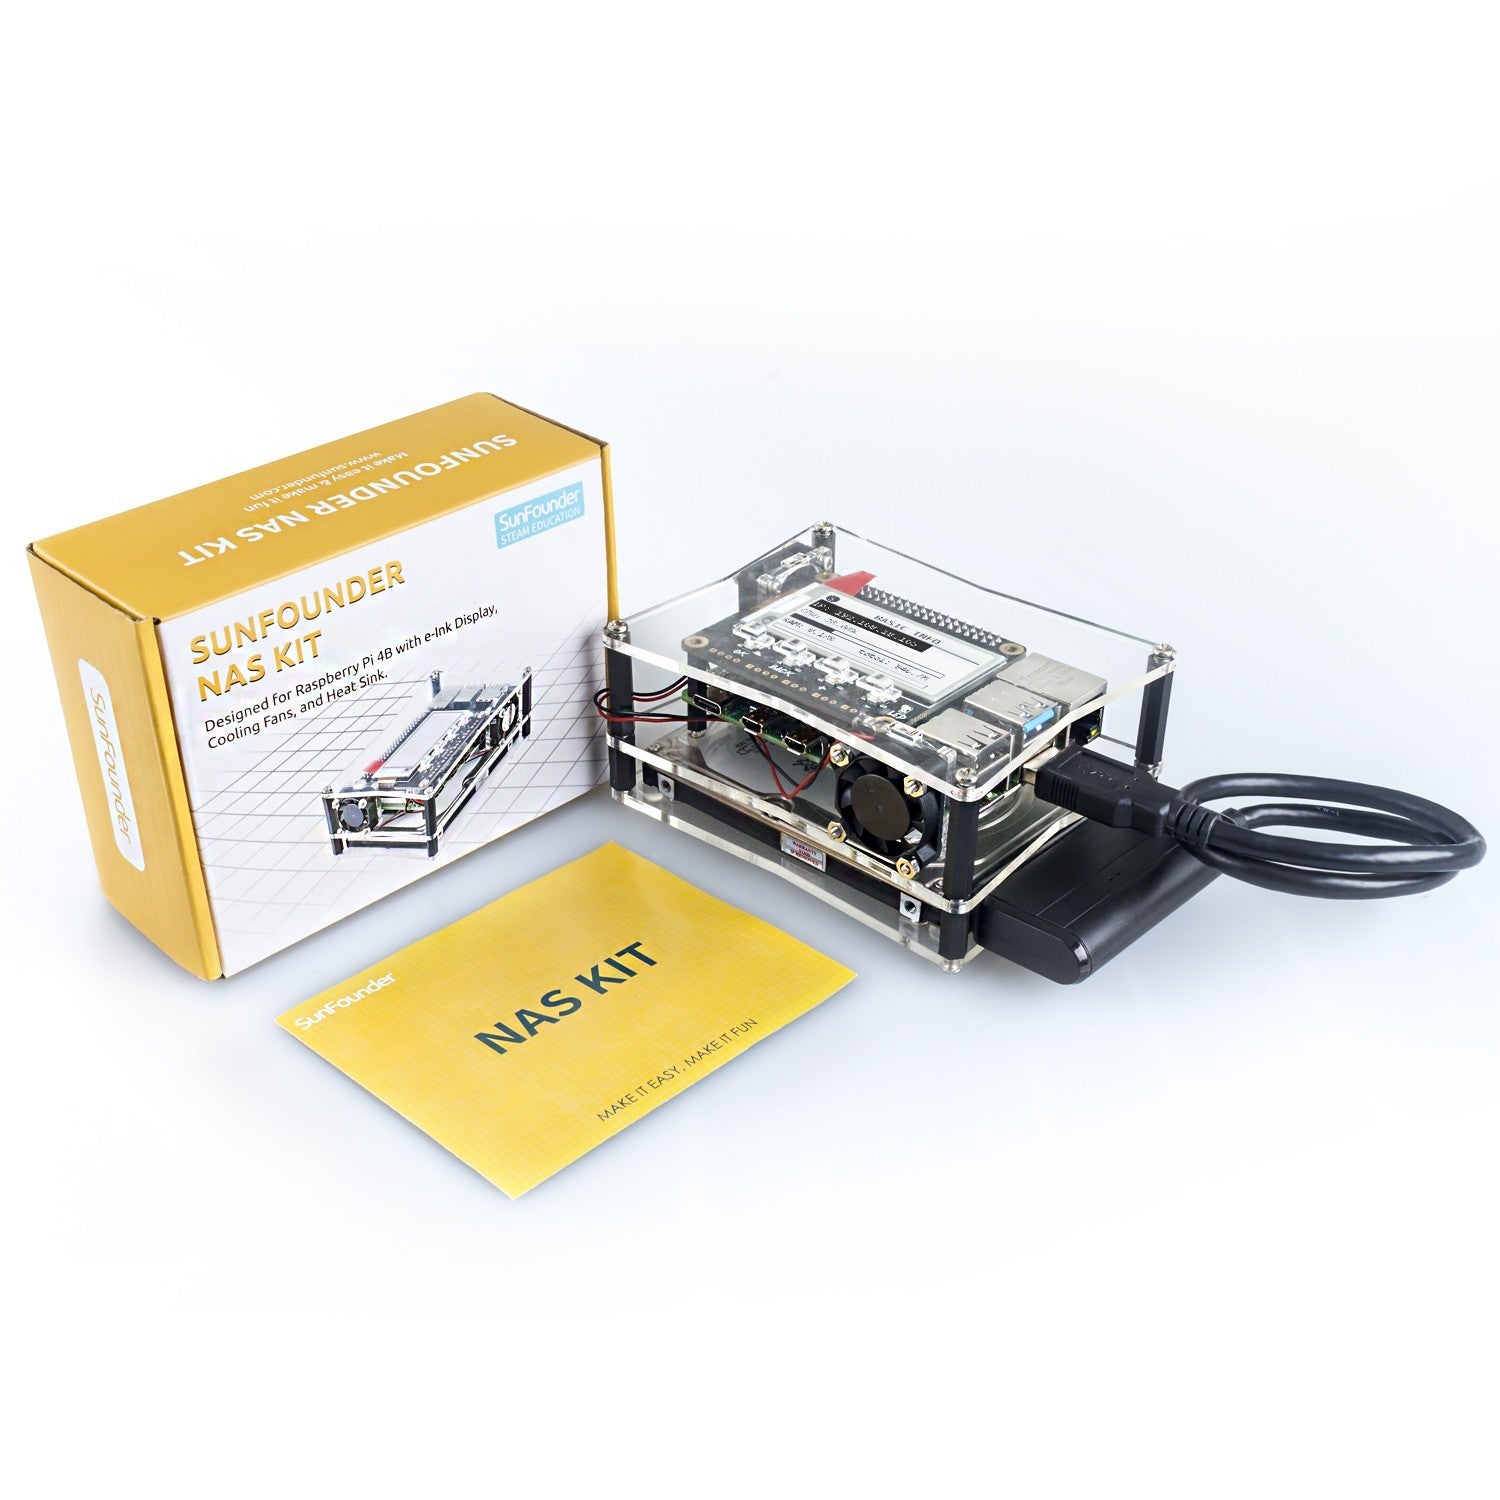 NAS Kit for Raspberry pi 4B/3B/3B+/2B/B+ with Dual fan